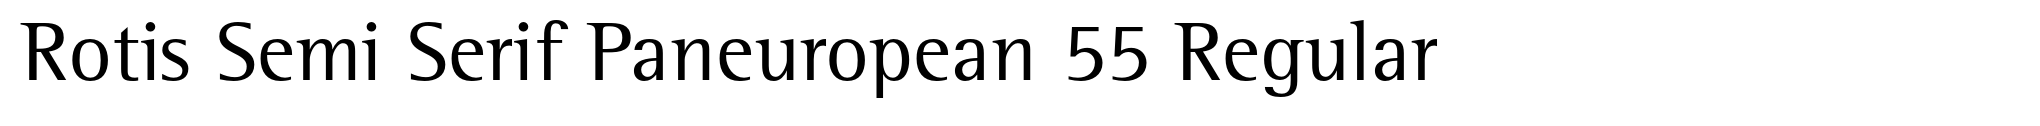 Rotis Semi Serif Paneuropean 55 Regular image